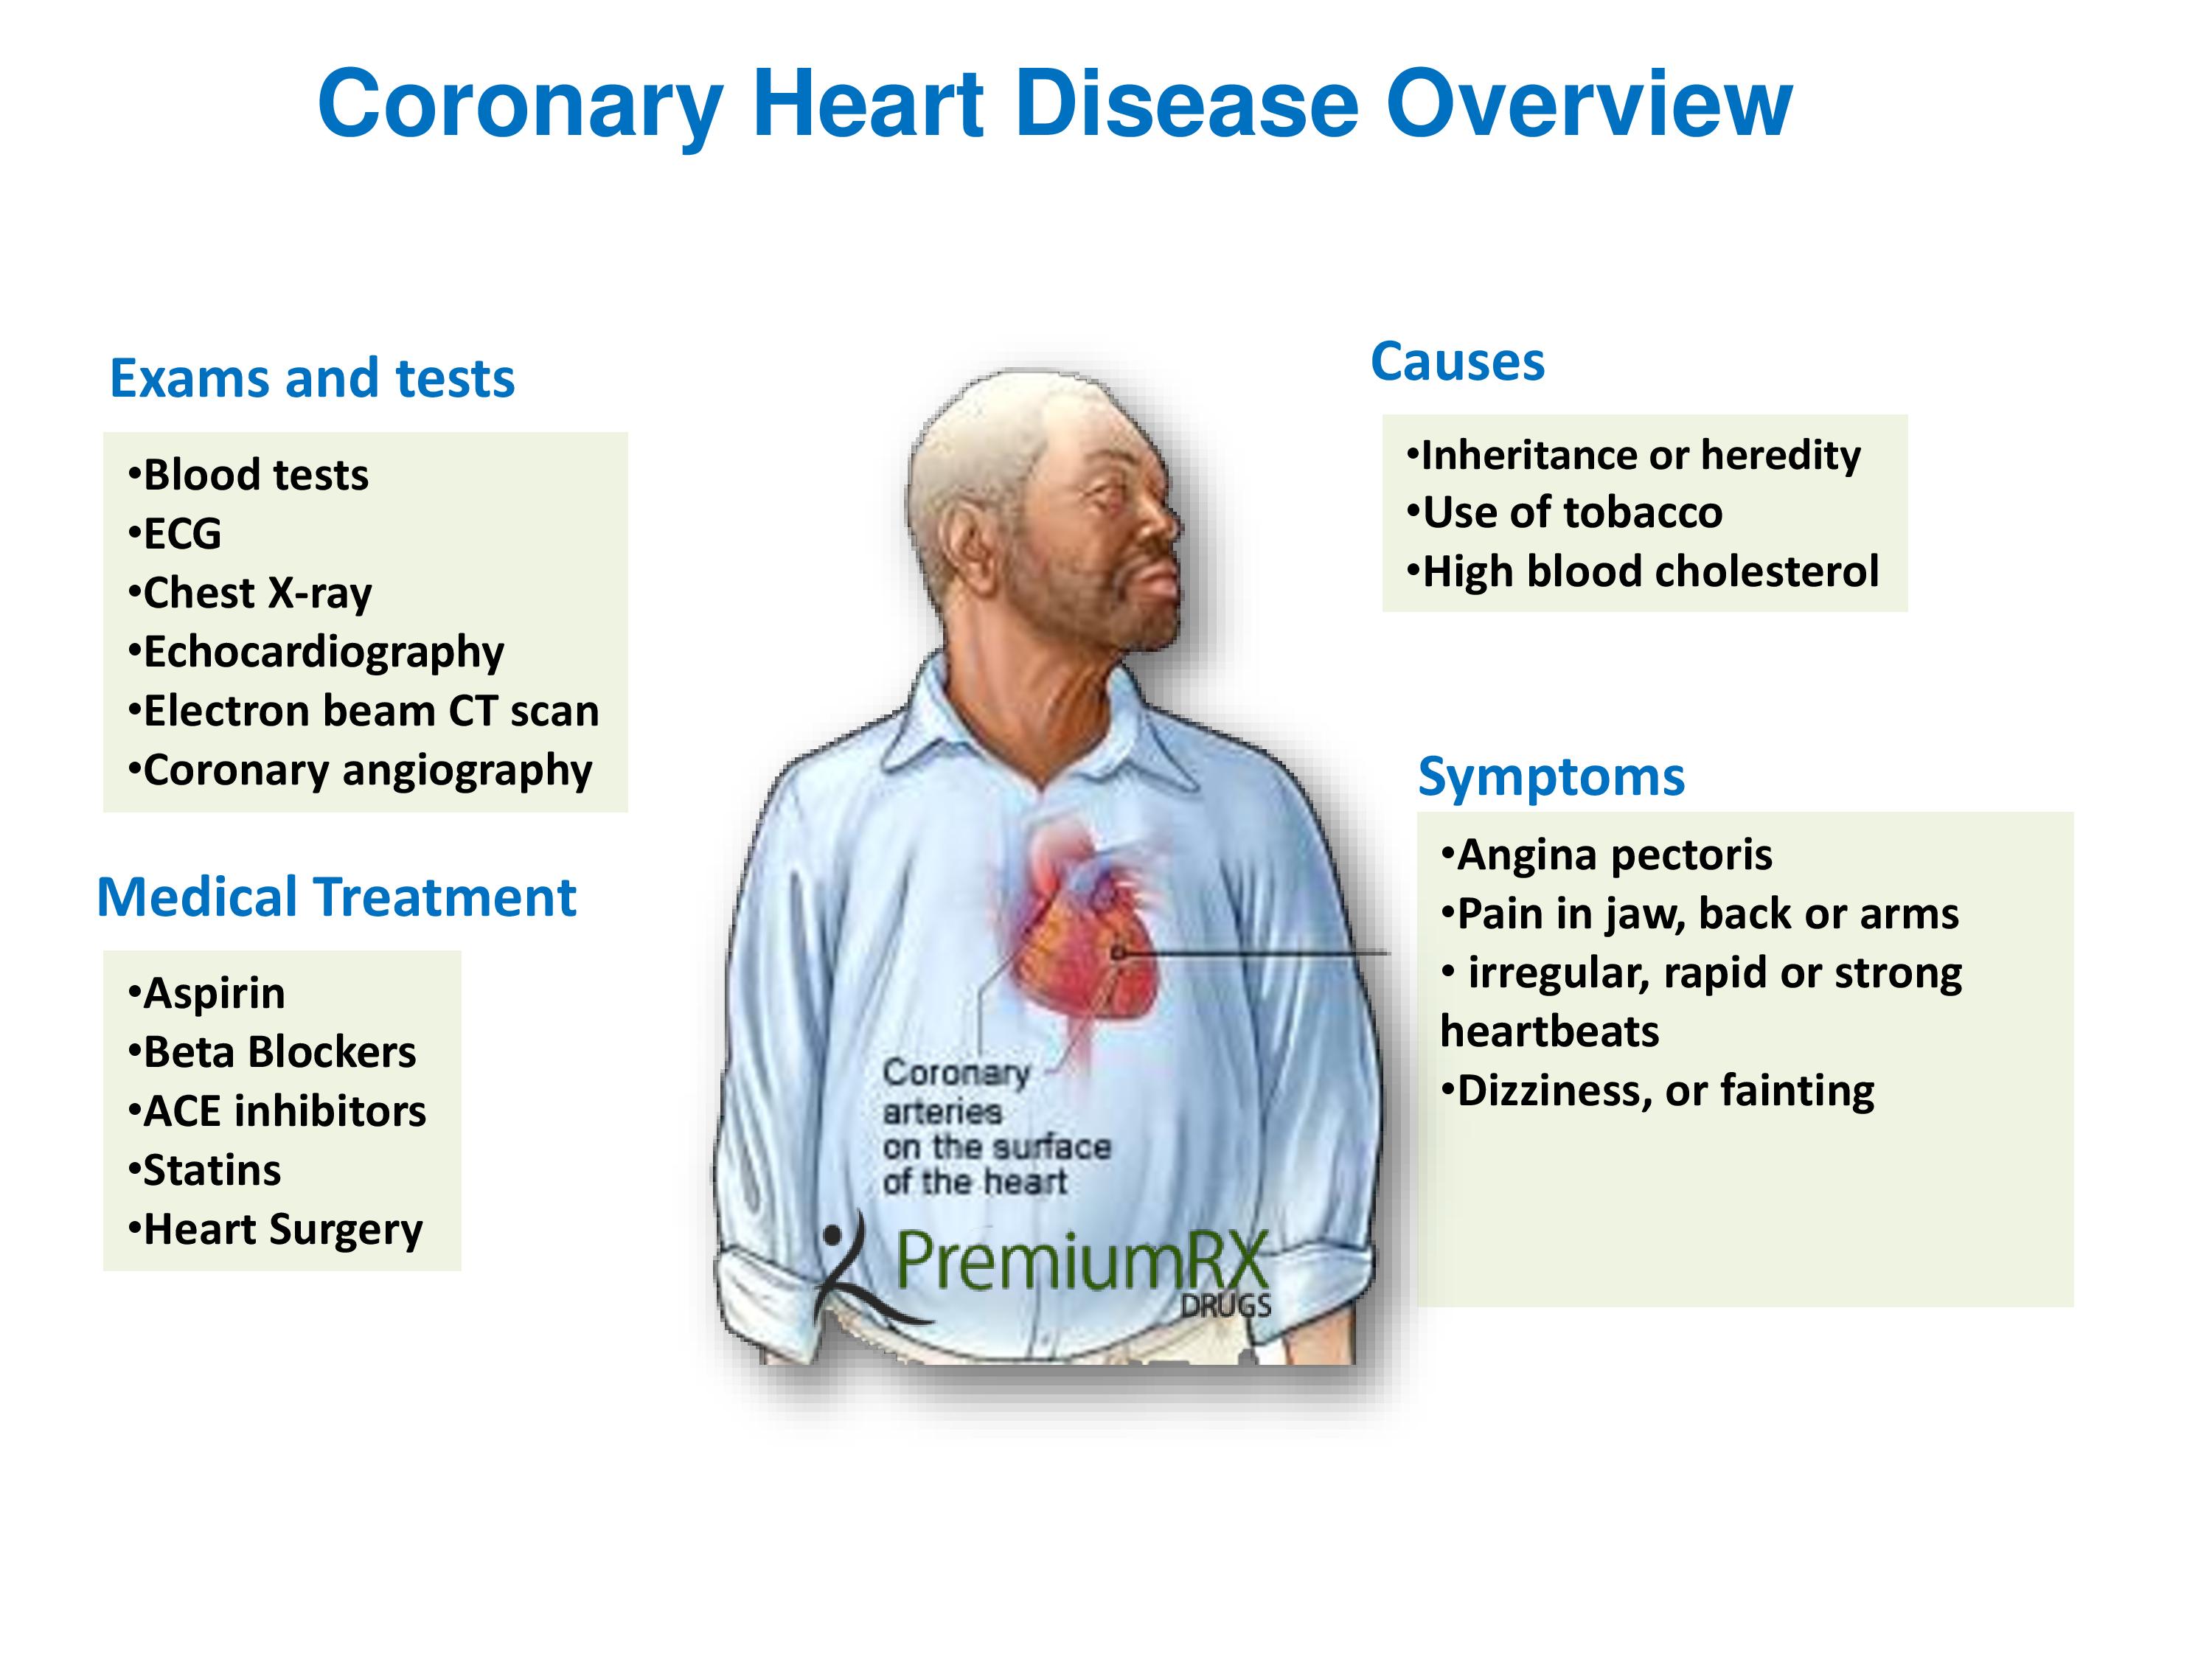 Coronary heart disease overview